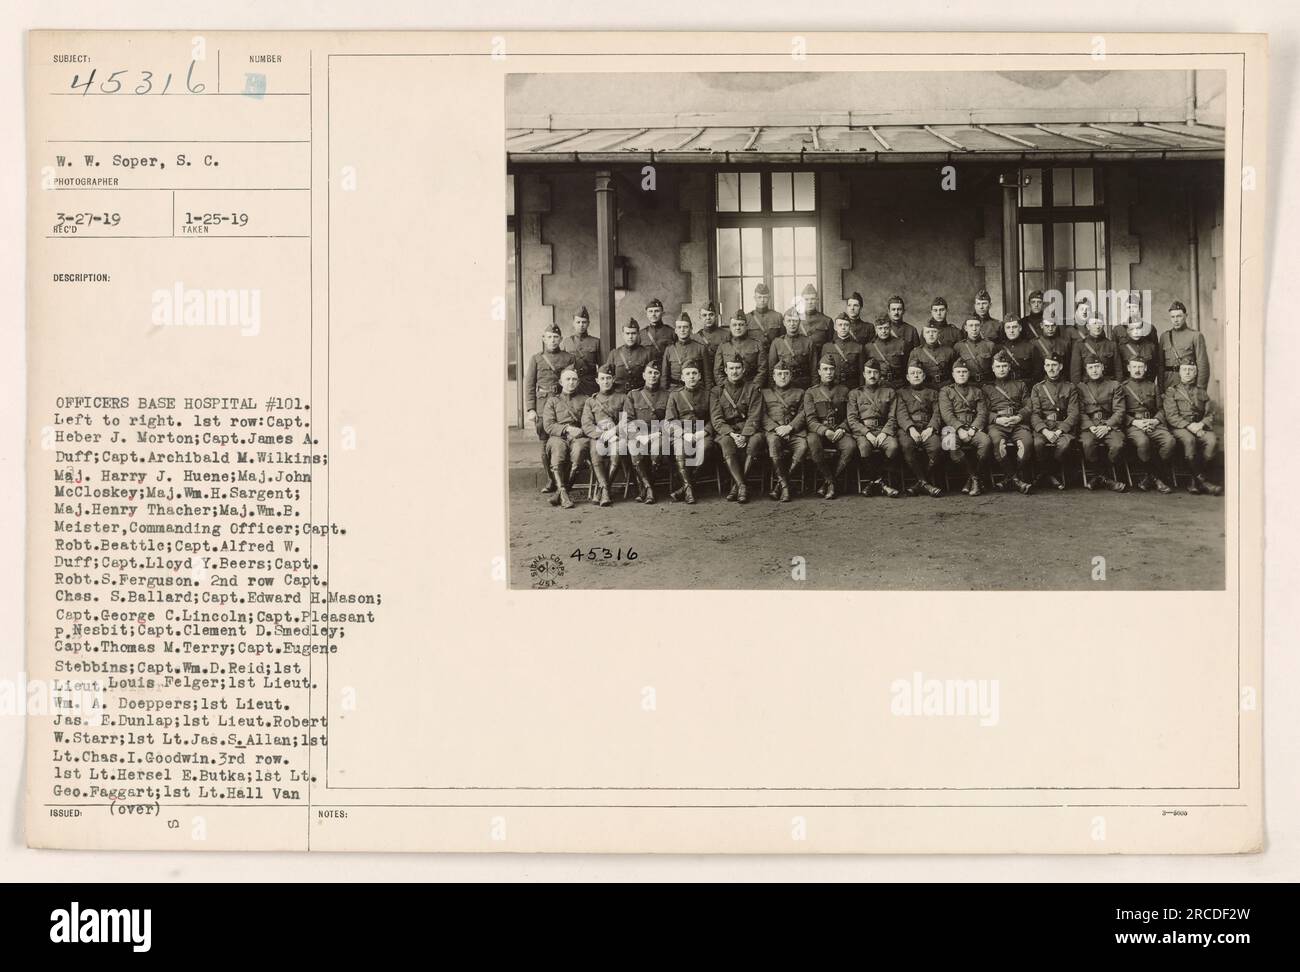 Group photo of officers from Base Hospital #101 taken on March 27, 1919. The names of the officers, listed left to right, are as follows: Capt. Heber J. Morton, Capt. James A. Duff, Capt.Archibald M. Wilkins, Maj. Harry J. Huene, Maj. John McCloskey, Maj. W.H. Sargent, Maj. Henry Thacher, Maj. W.B. Meister (Commanding Officer), Capt. Rebt. Beattle, Capt. Alfred W. Duff, Capt. Lloyd Y. Beers, Capt. Robt. P. Ferguson, Capt. Ches. S.Ballard, Capt. Edward H. Meson, Capt. George C. Lincoln, Capt. Pleasant P. Nesbit, Capt. Clement D. Smedley, Capt. Thomas M. Terry, Capt. Eugene Stebbins, Capt. Wm. D Stock Photo